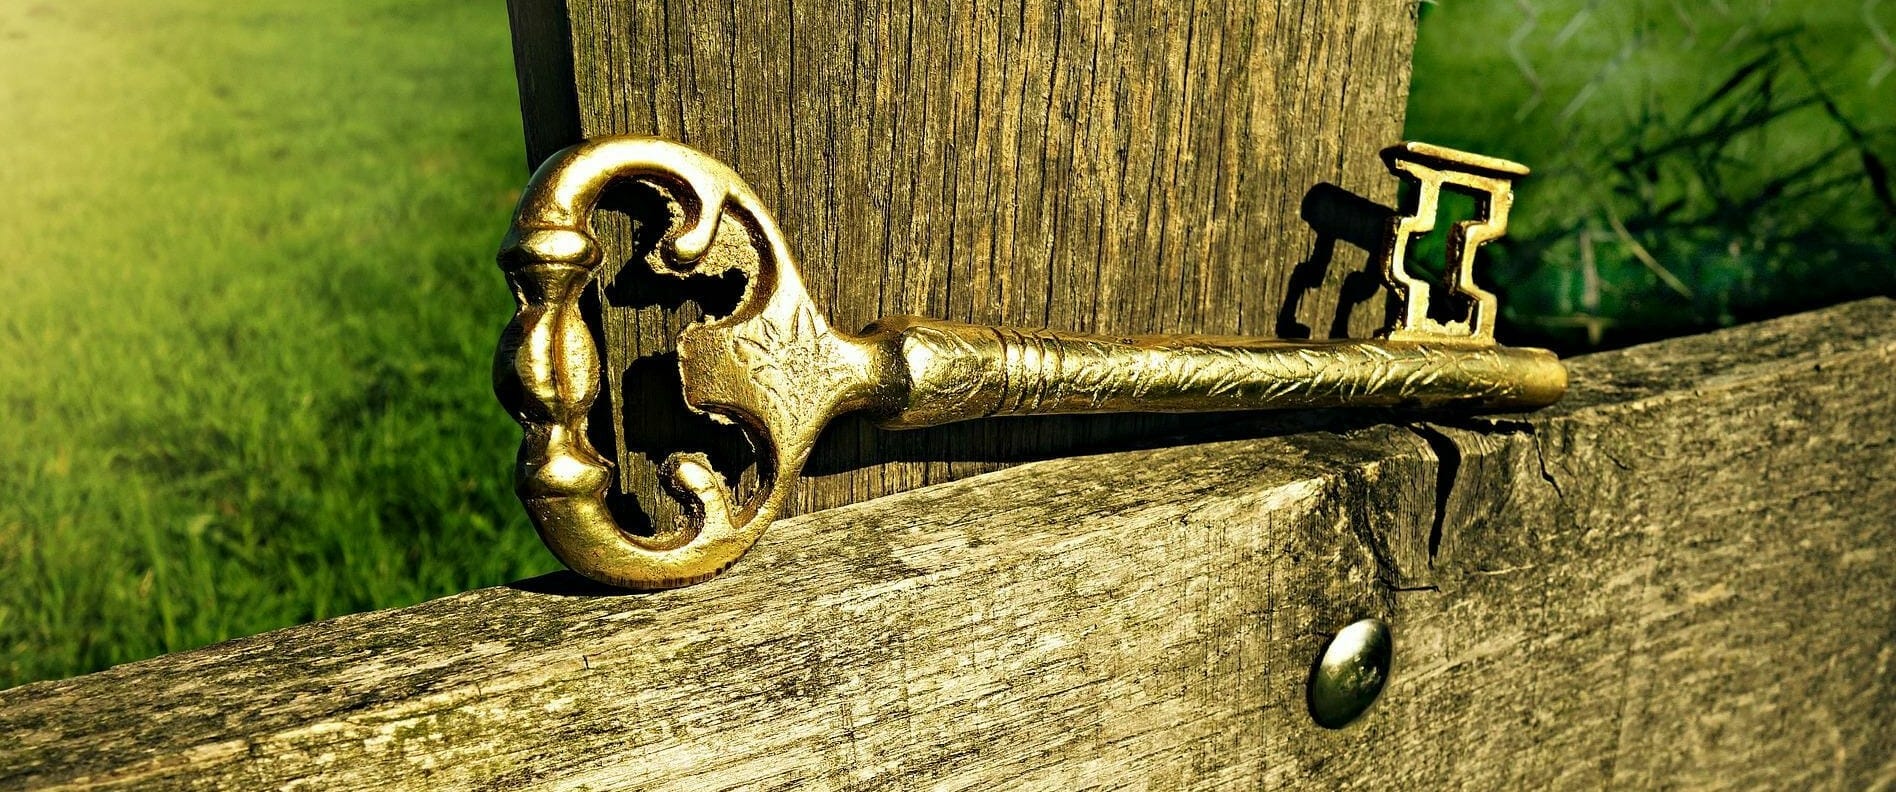 Ключ золотая жила. Красивый старинный ключ. Золотой ключ. Ключик на удачу. Ключ сказочный.